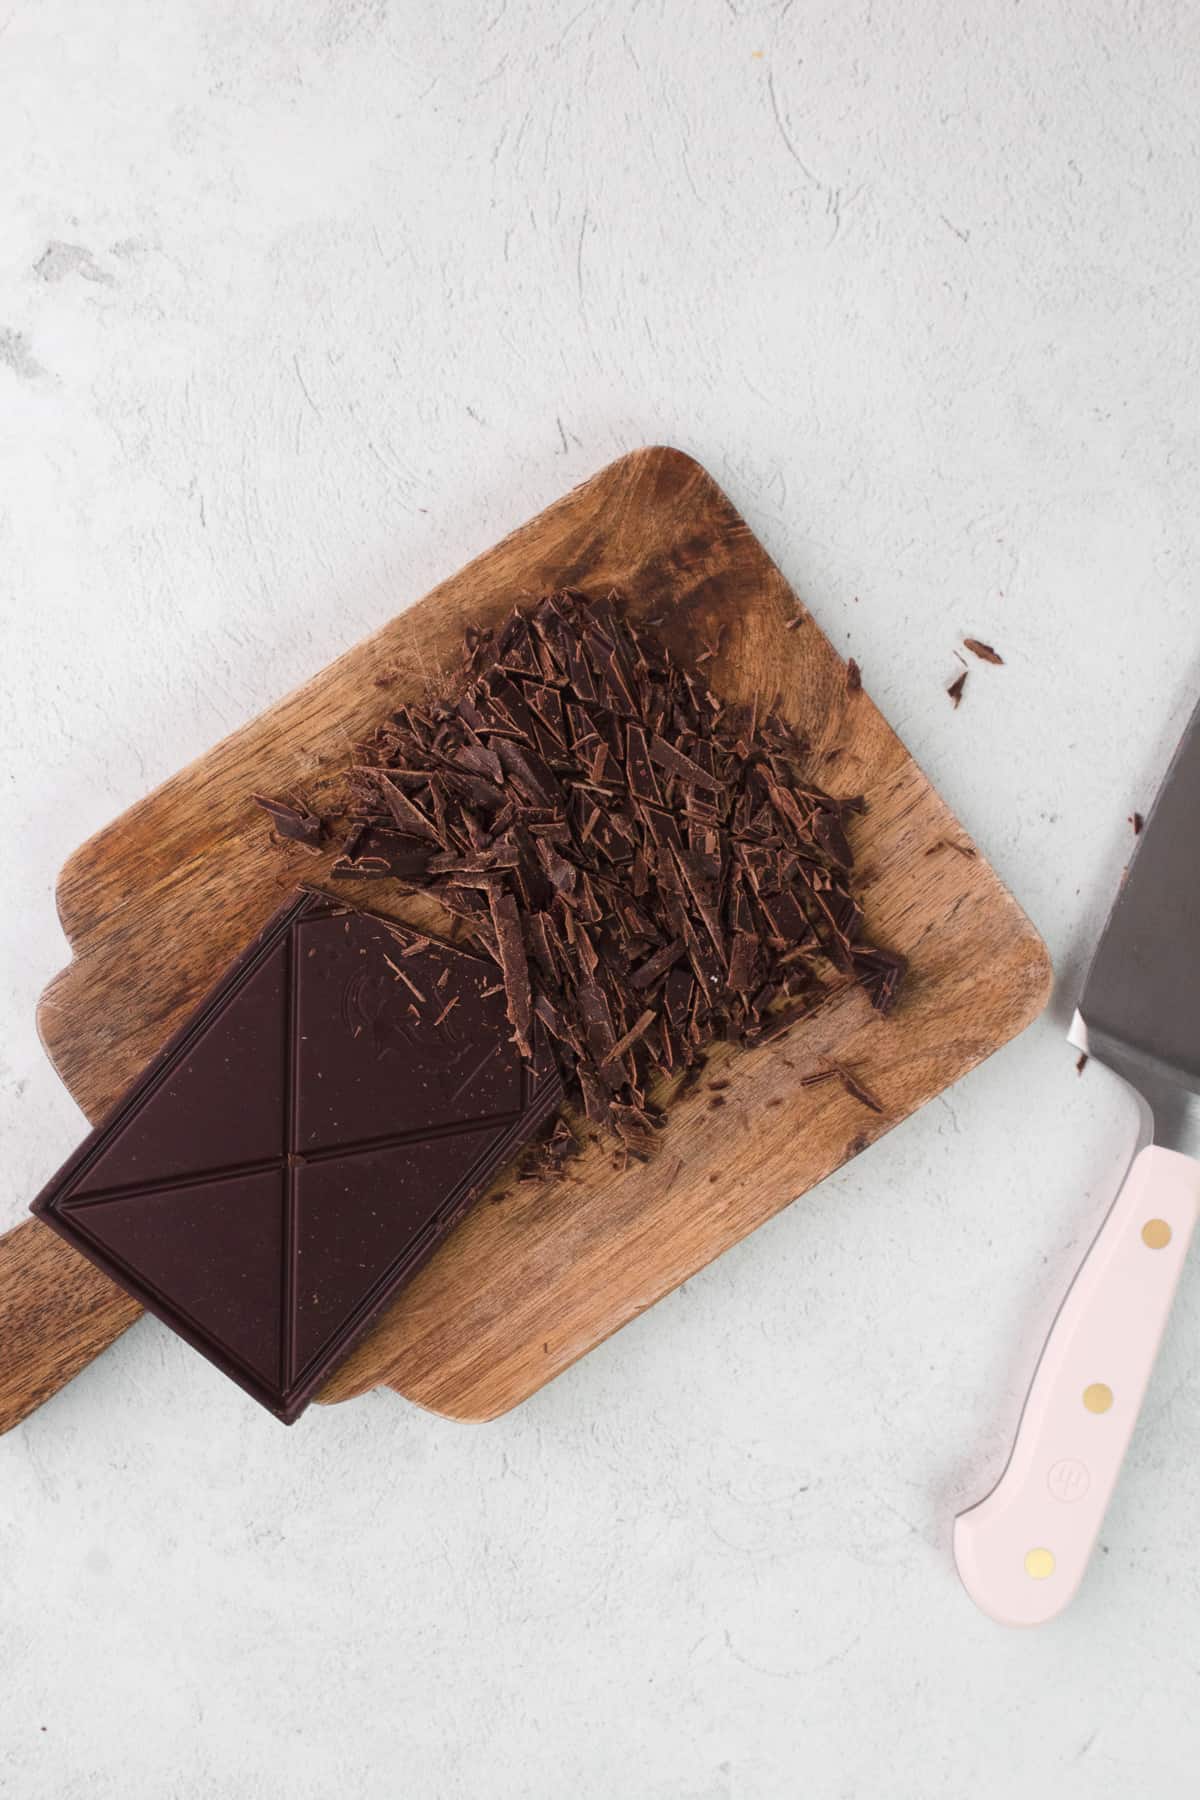 Chopped chocolate on a cutting board 